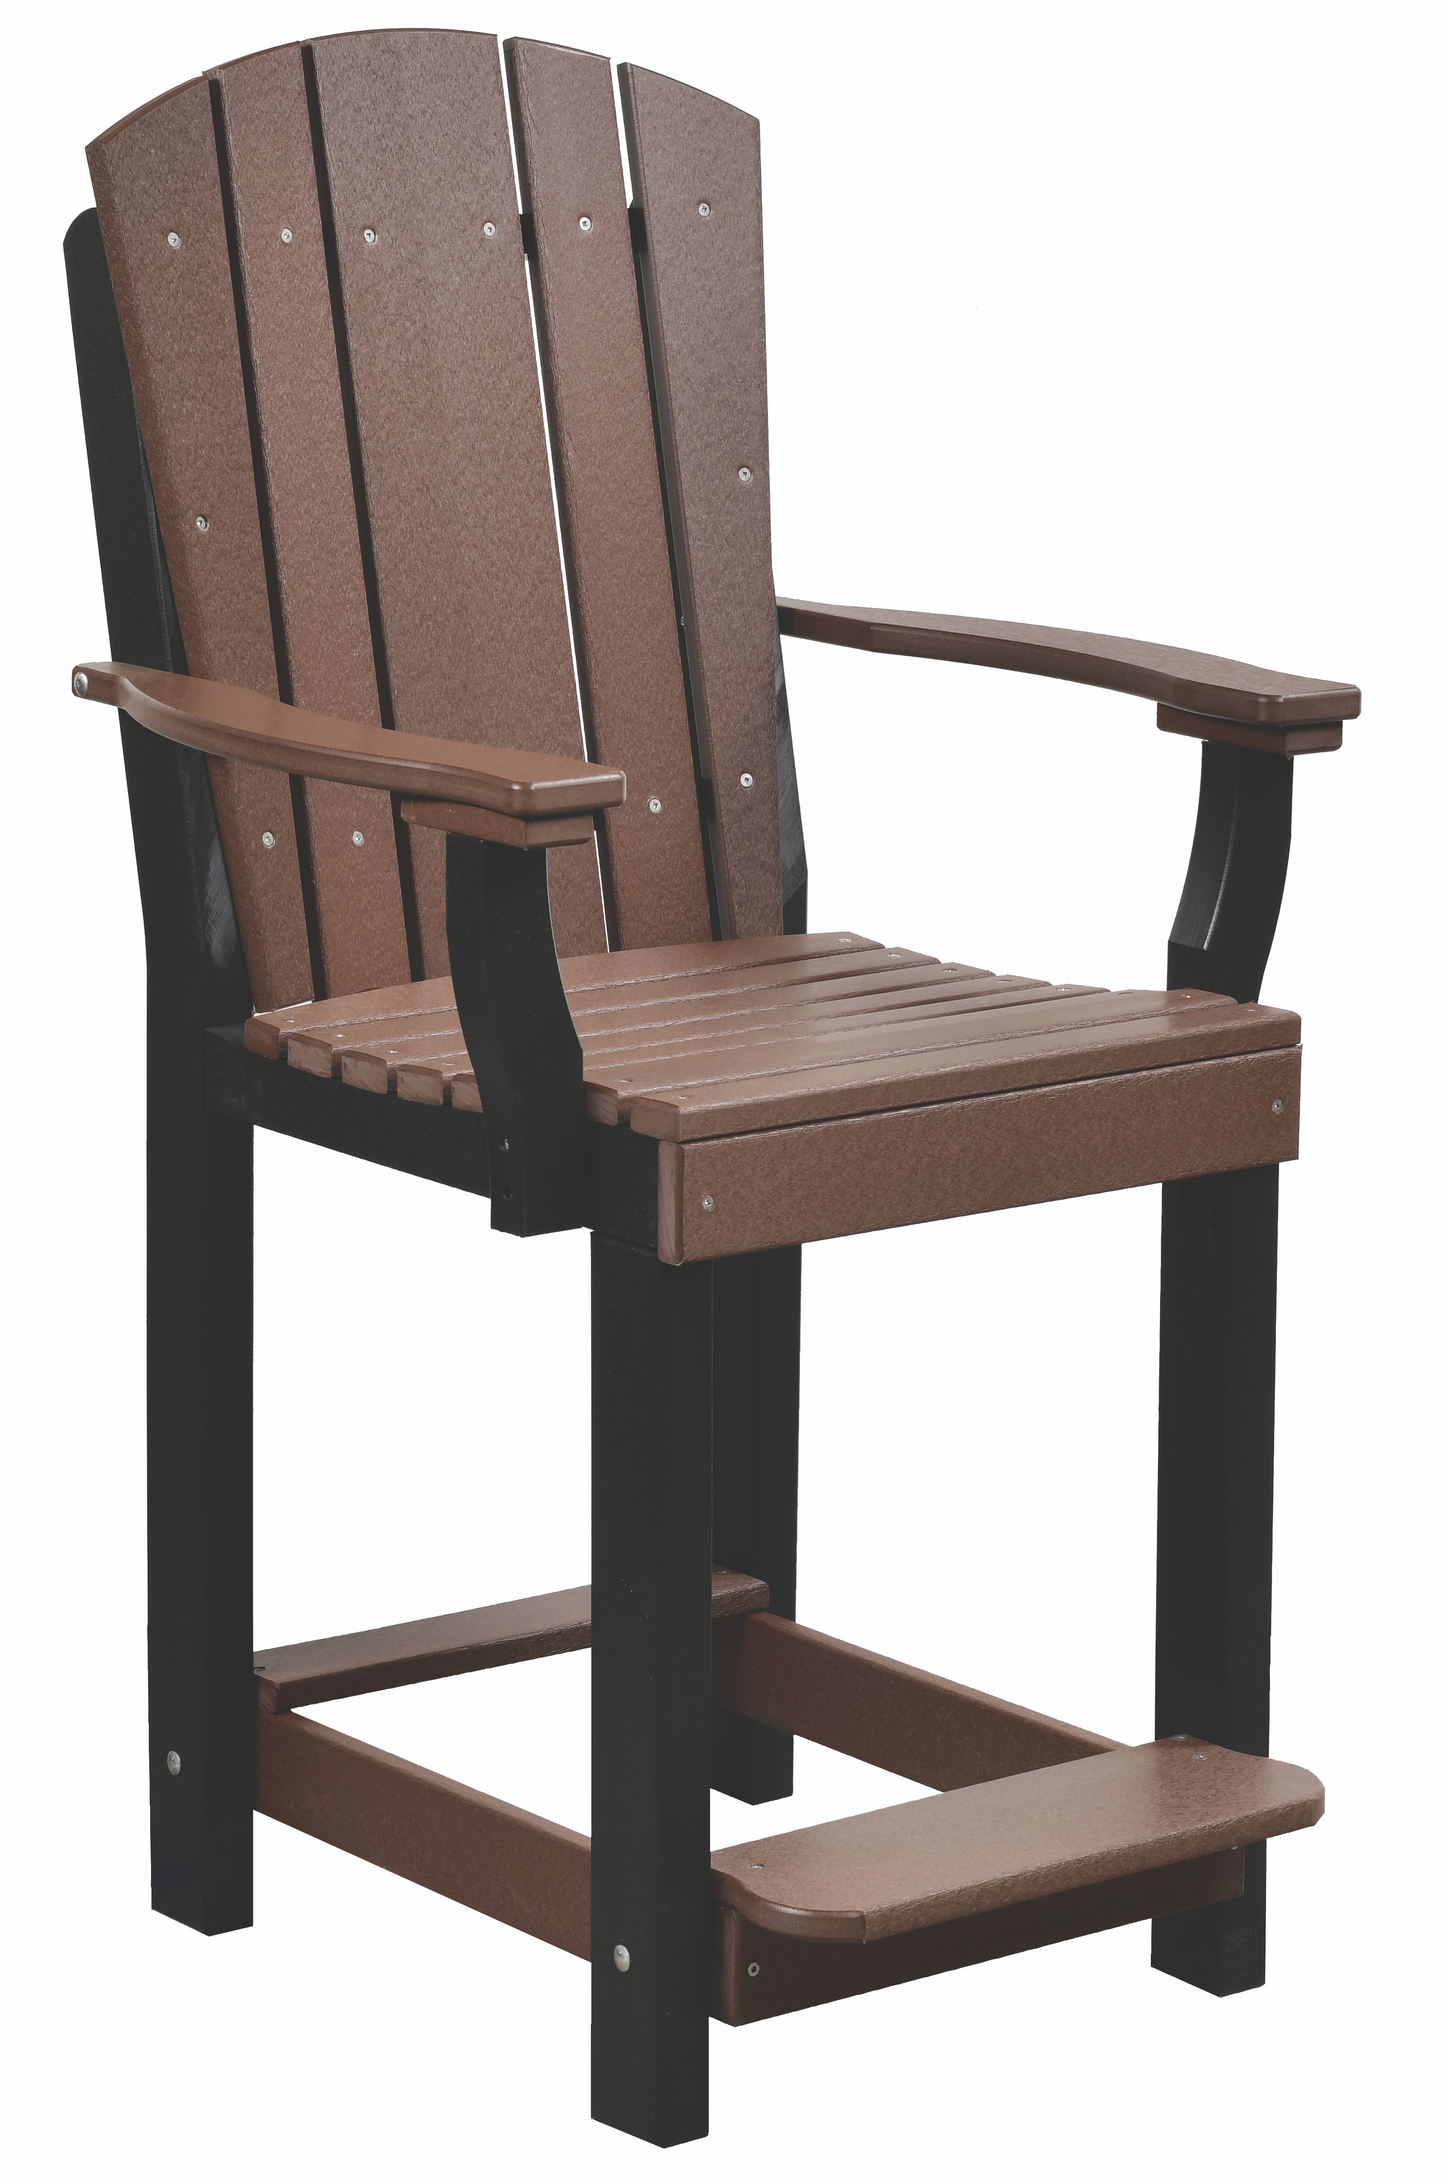 Wildridge Heritage Recycled Plastic Counter Height Patio Chair 